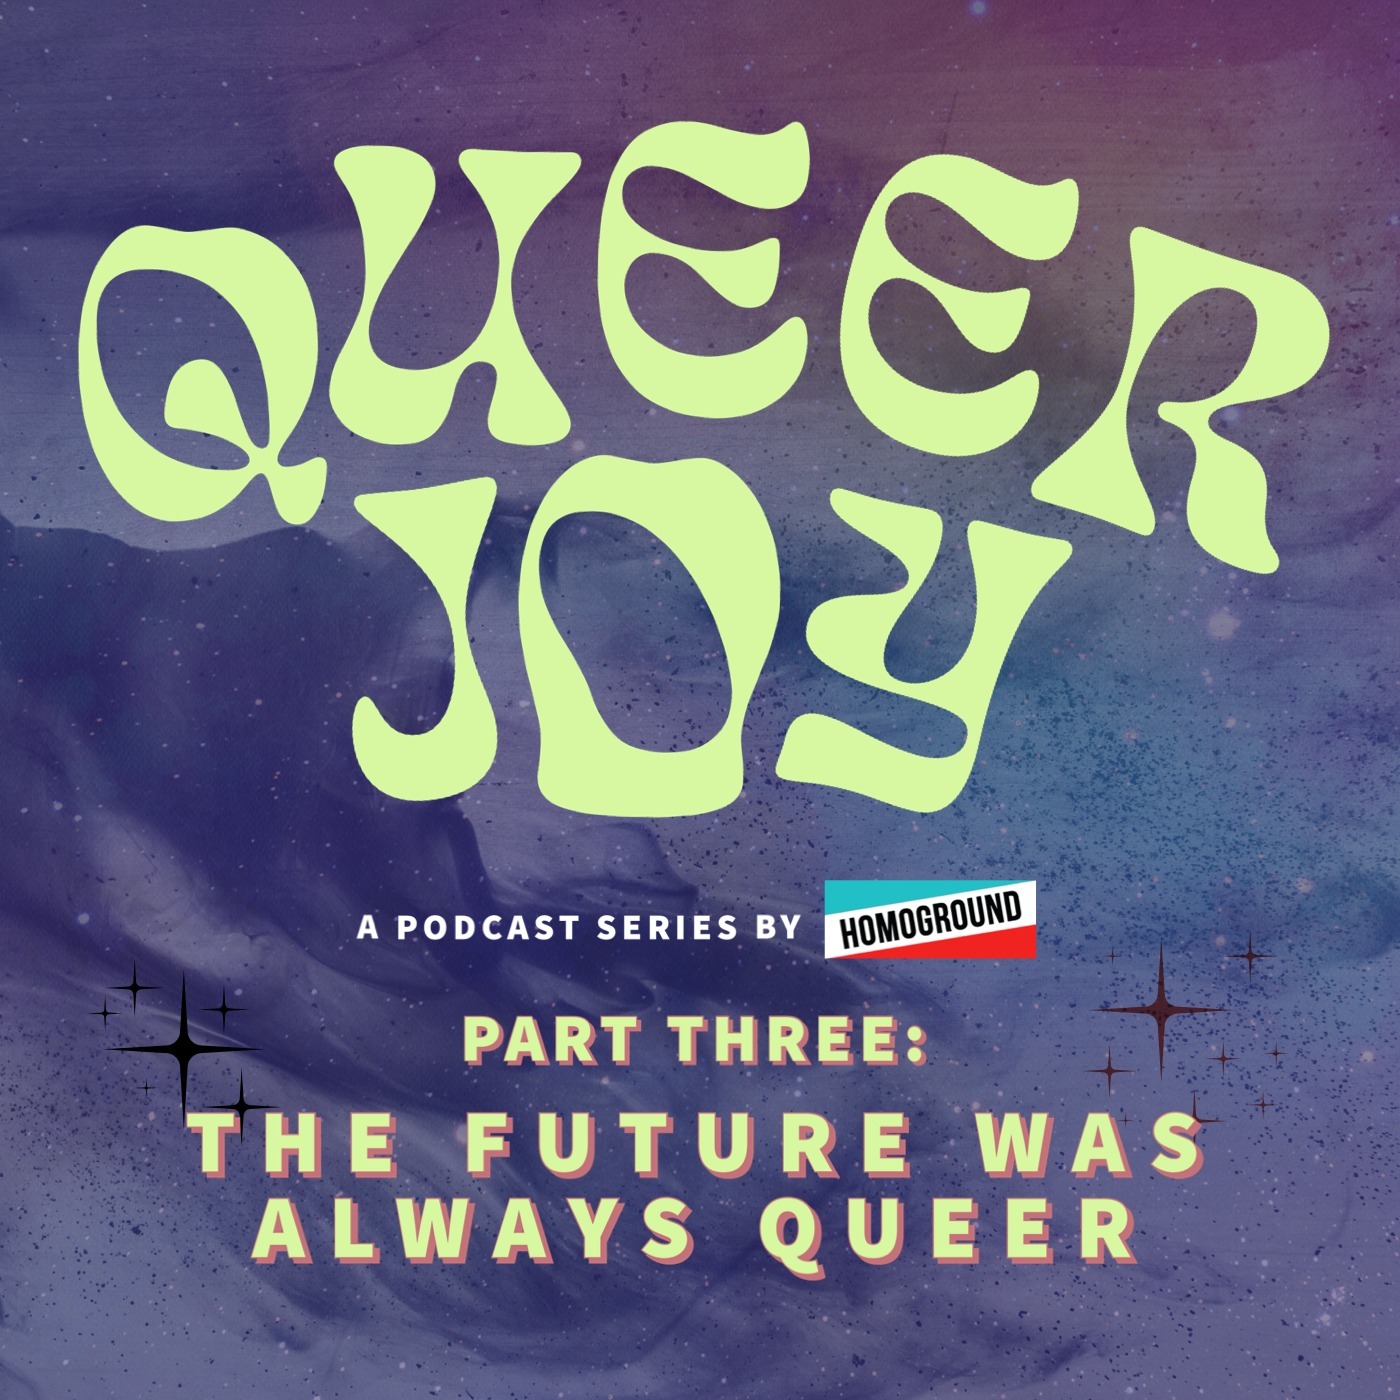 Queer Joy Part 3: ”The Future Was Always Queer” Feat. Creatrx, Sara Renberg, Oxeye, Travel Starless [#275]